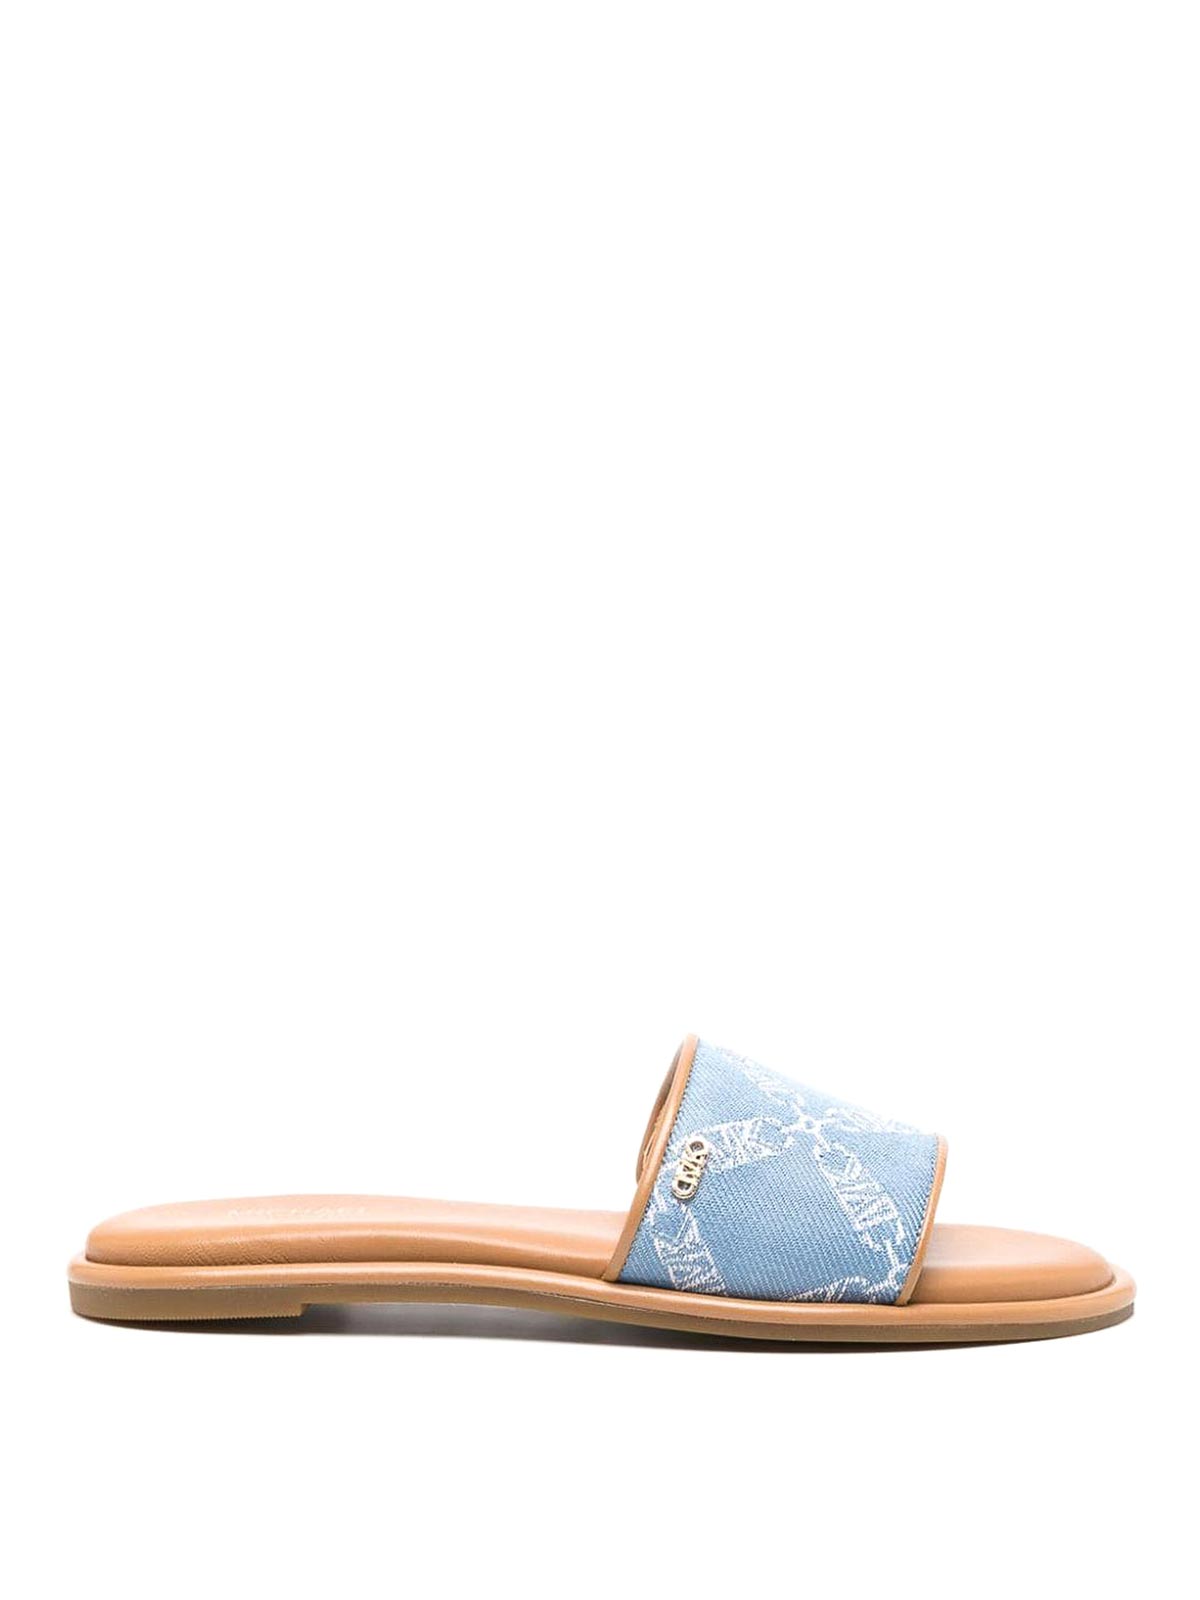 Michael Kors Saylor Flat Sandals In Blue